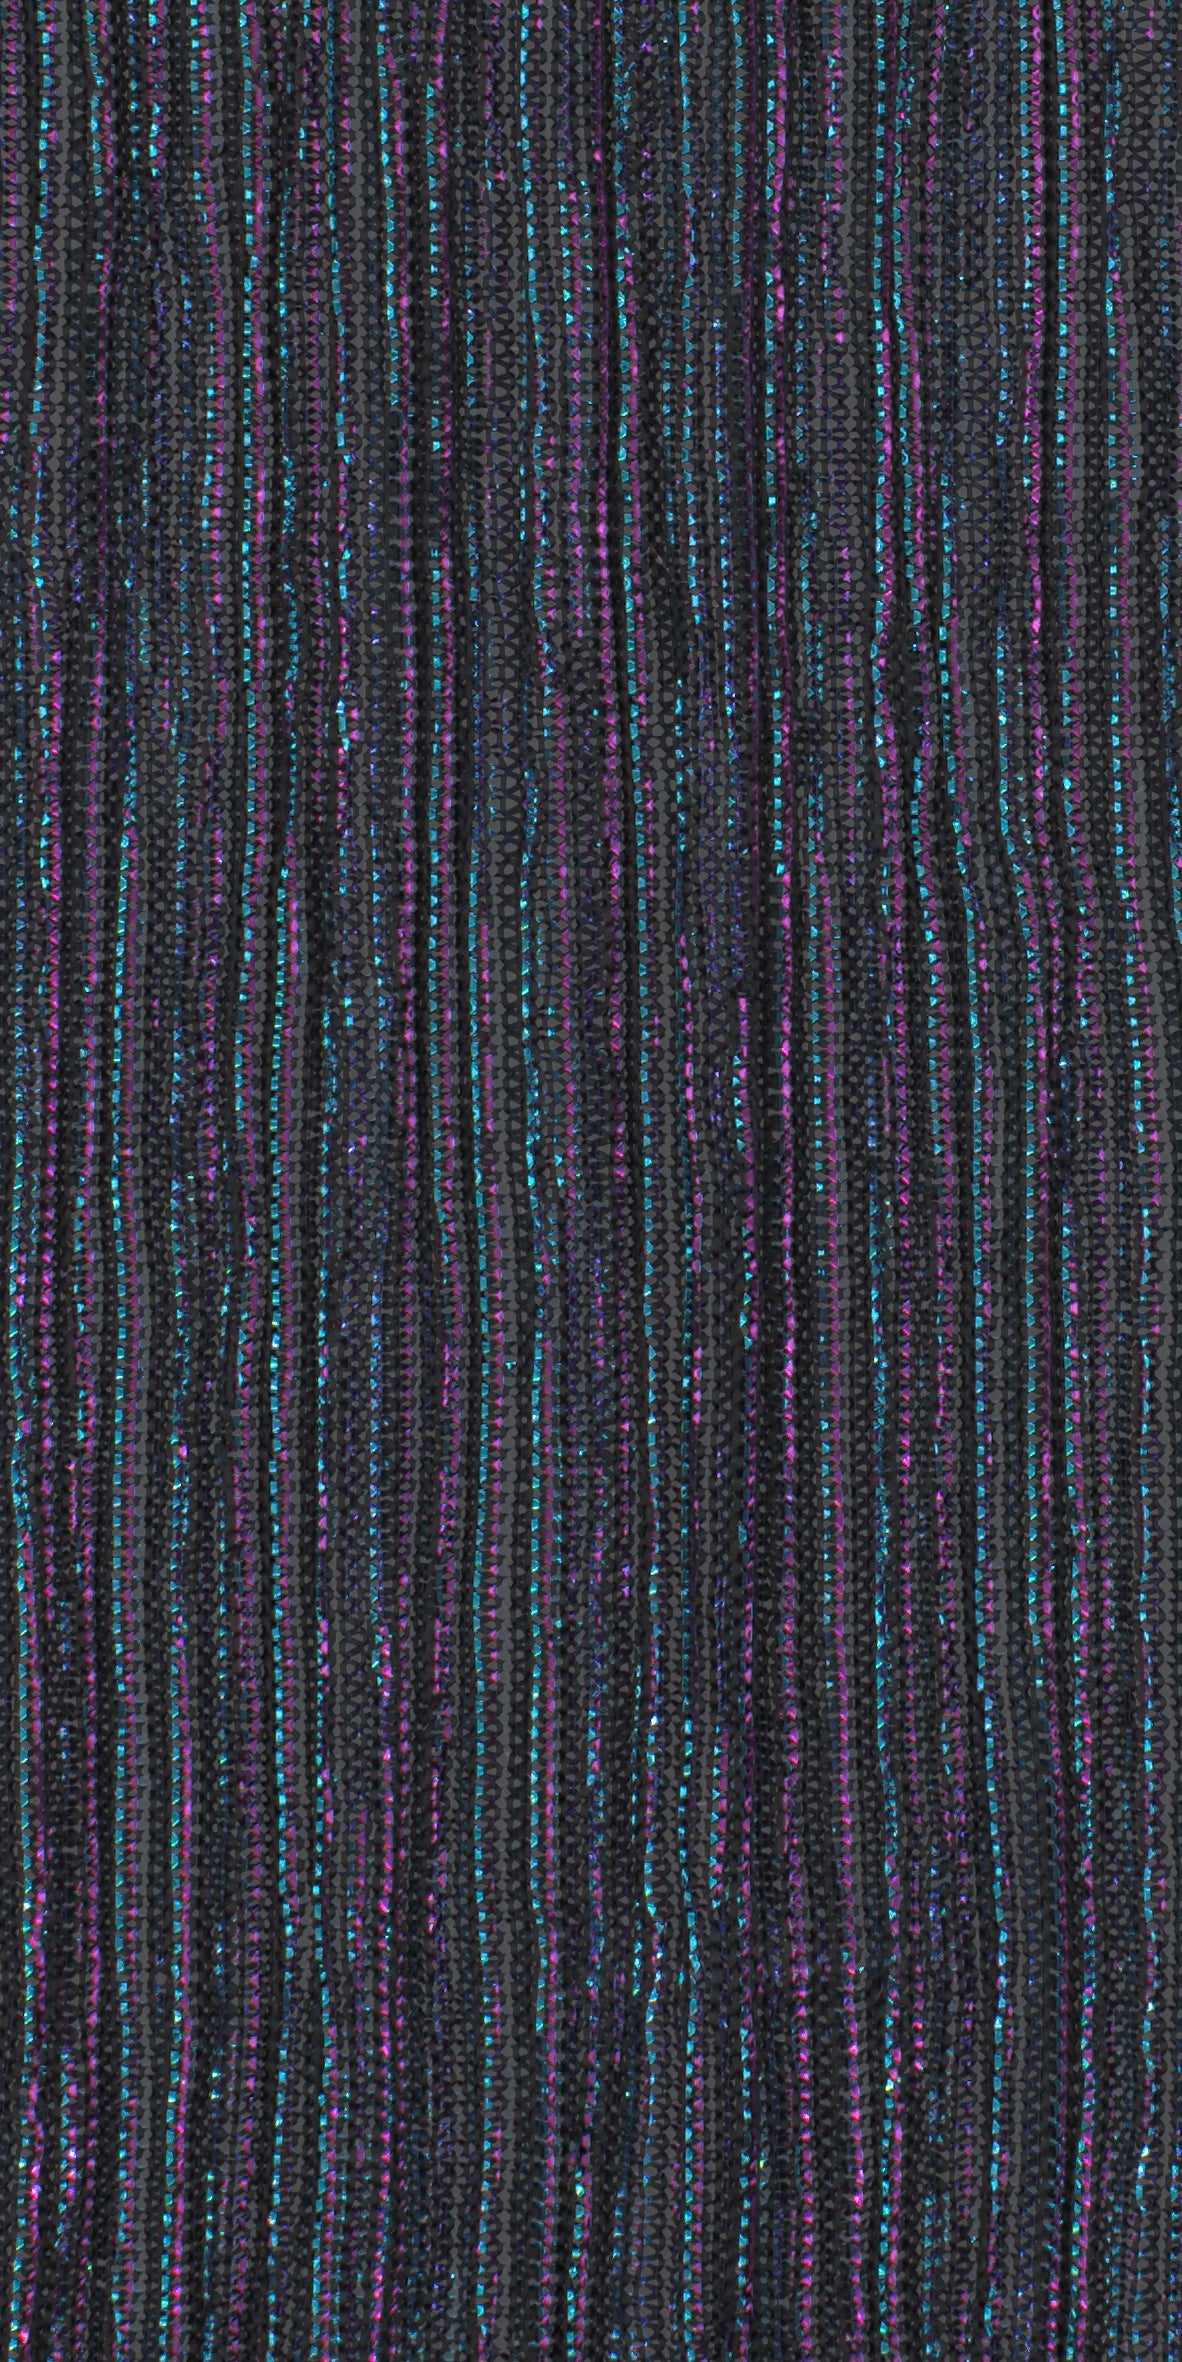 12006-25 Blue Purple Light Blue Metallic Pleat Plain Dyed Blend 126g/yd 56&quot; blend blue knit metallic plain dyed pleat ppl new purple Metallic, Pleat - knit fabric - woven fabric - fabric company - fabric wholesale - fabric b2b - fabric factory - high quality fabric - hong kong fabric - fabric hk - acetate fabric - cotton fabric - linen fabric - metallic fabric - nylon fabric - polyester fabric - spandex fabric - chun wing hing - cwh hk - fabric worldwide ship - 針織布 - 梳織布 - 布料公司- 布料批發 - 香港布料 - 秦榮興